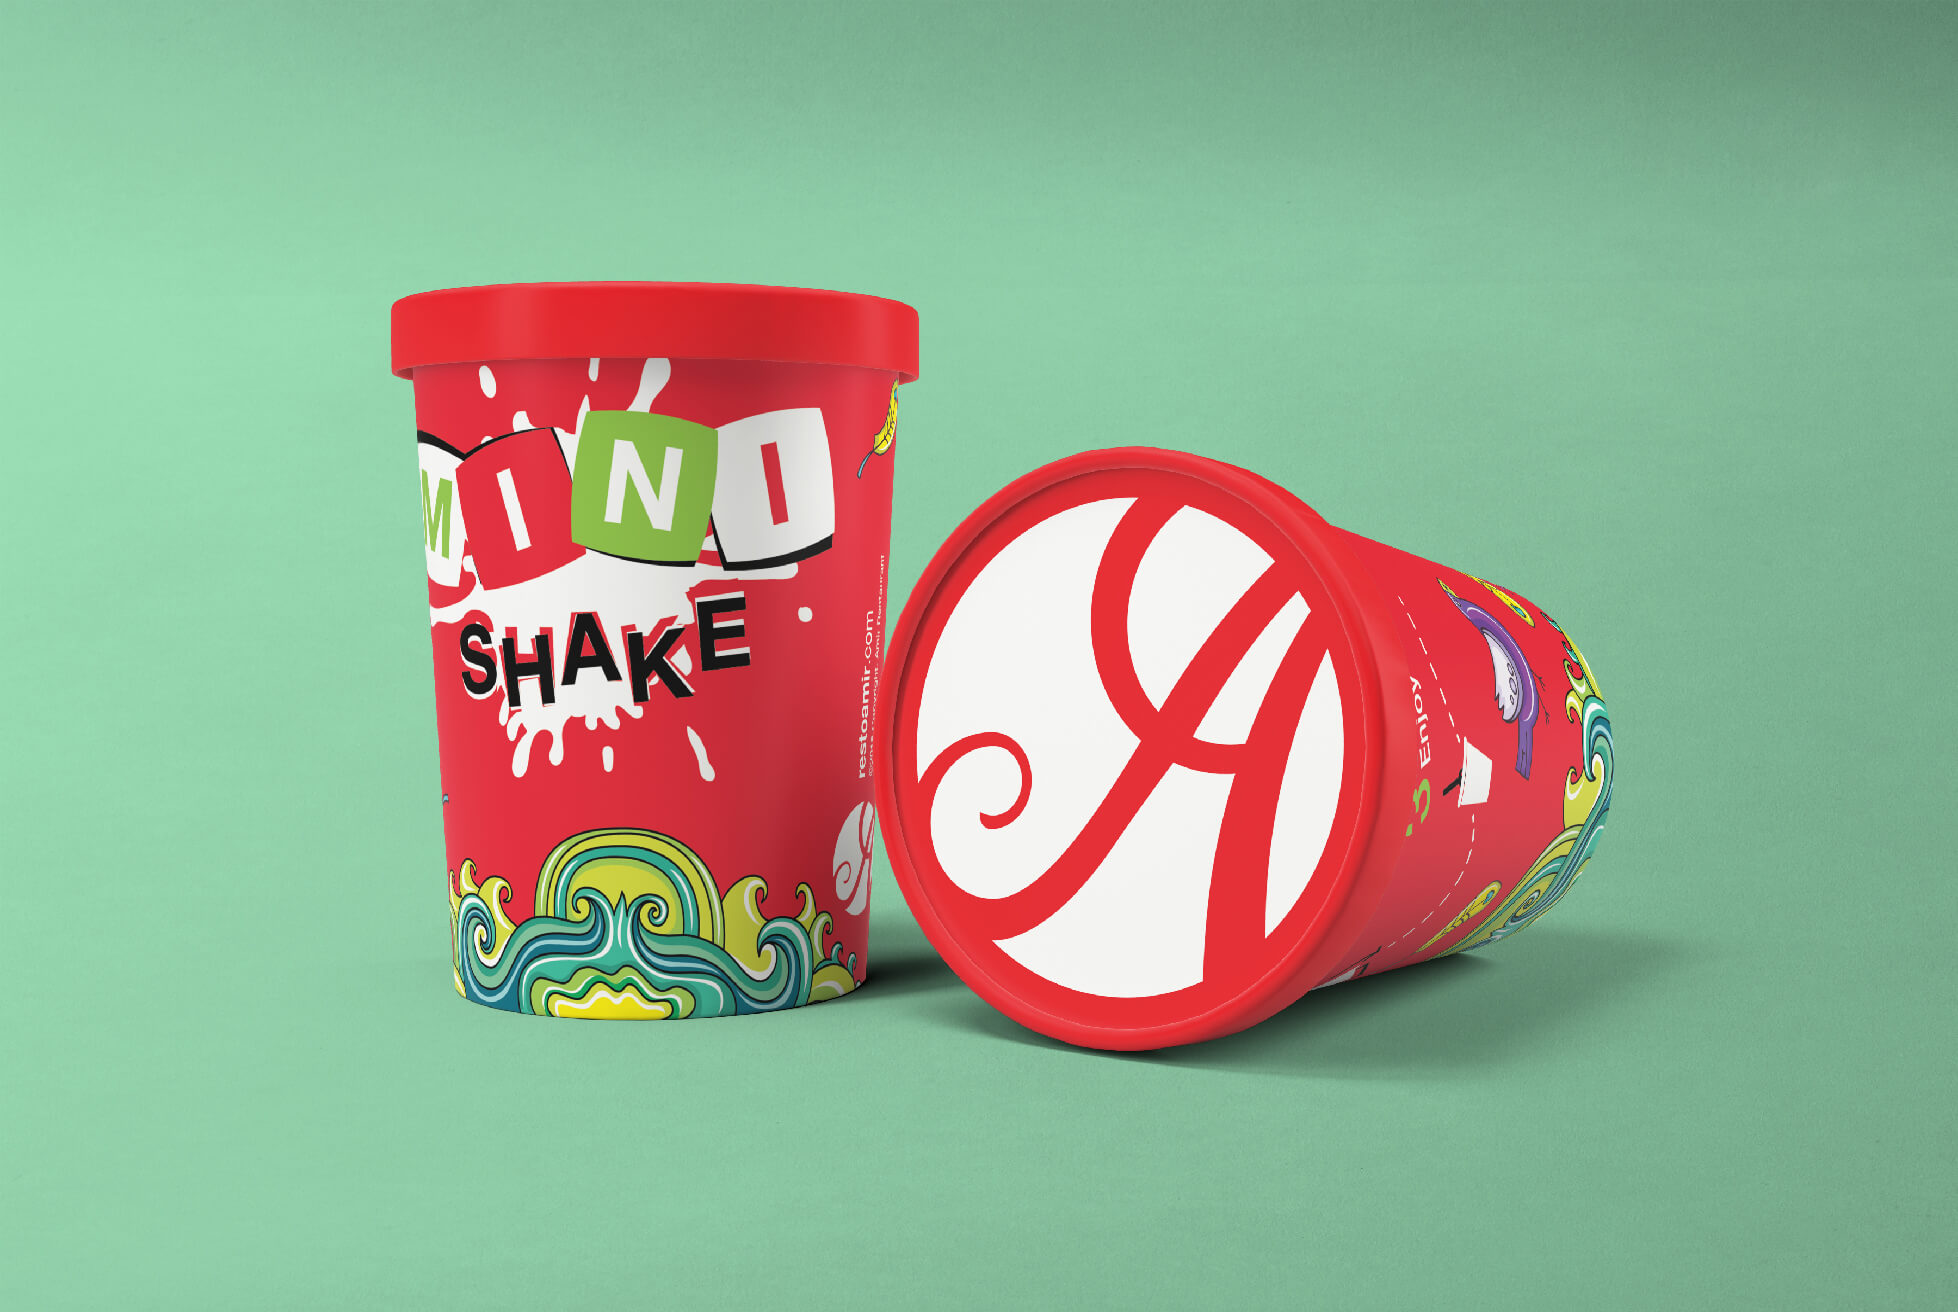 amir_mini-shake_forest-theme-bucket